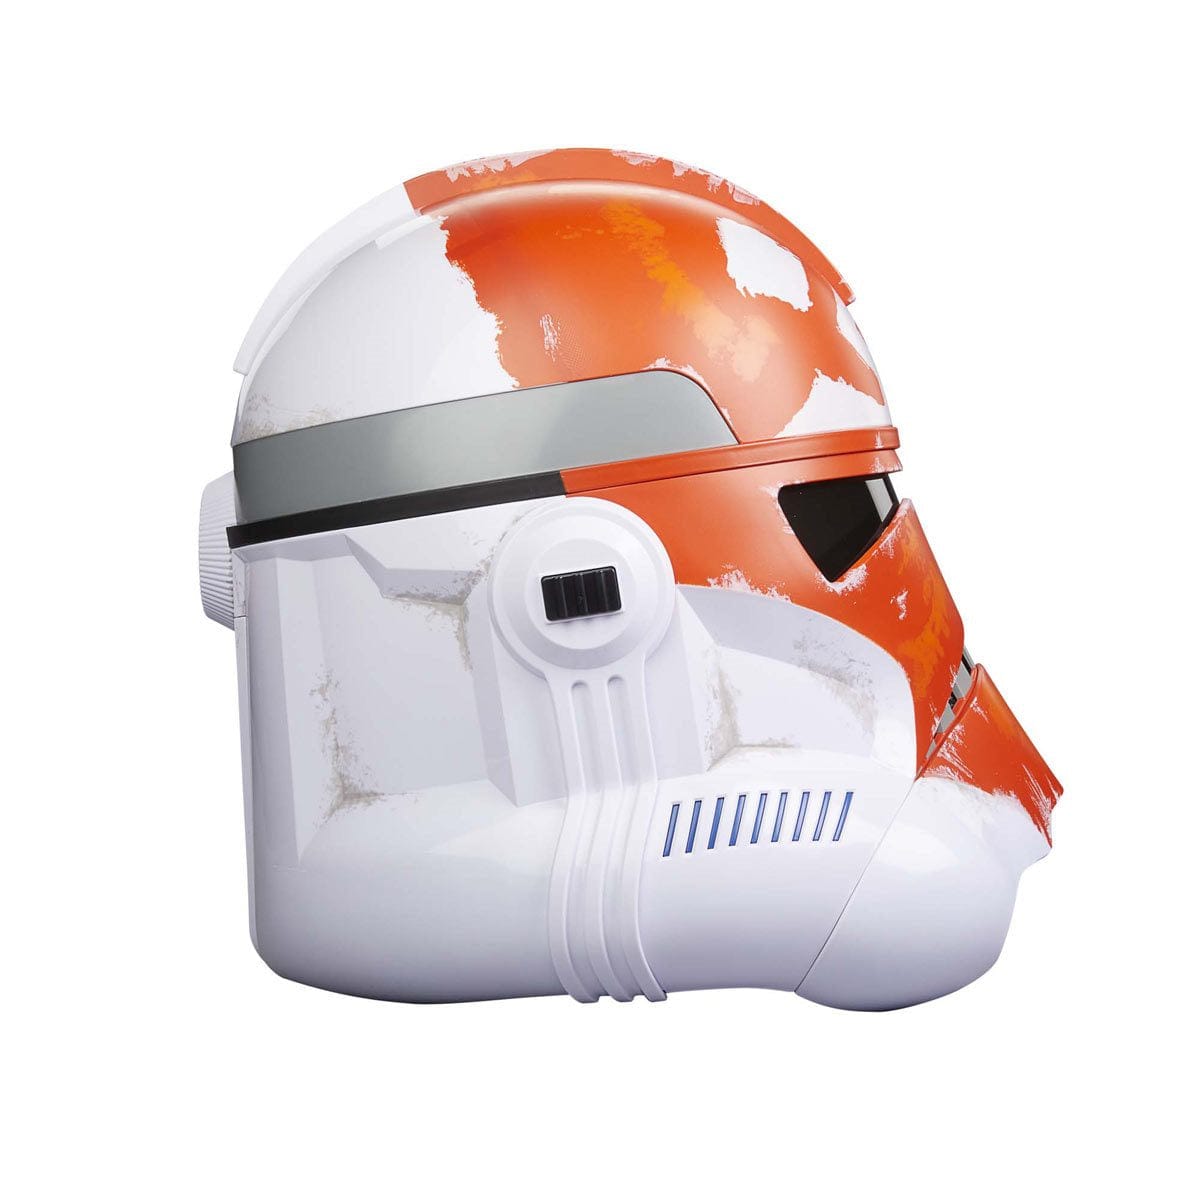 Star Wars Roleplay - The Black Series - The Clone Wars - 332nd Ahsoka’s Clone Trooper Helmet - 5L00 Right Side Profile